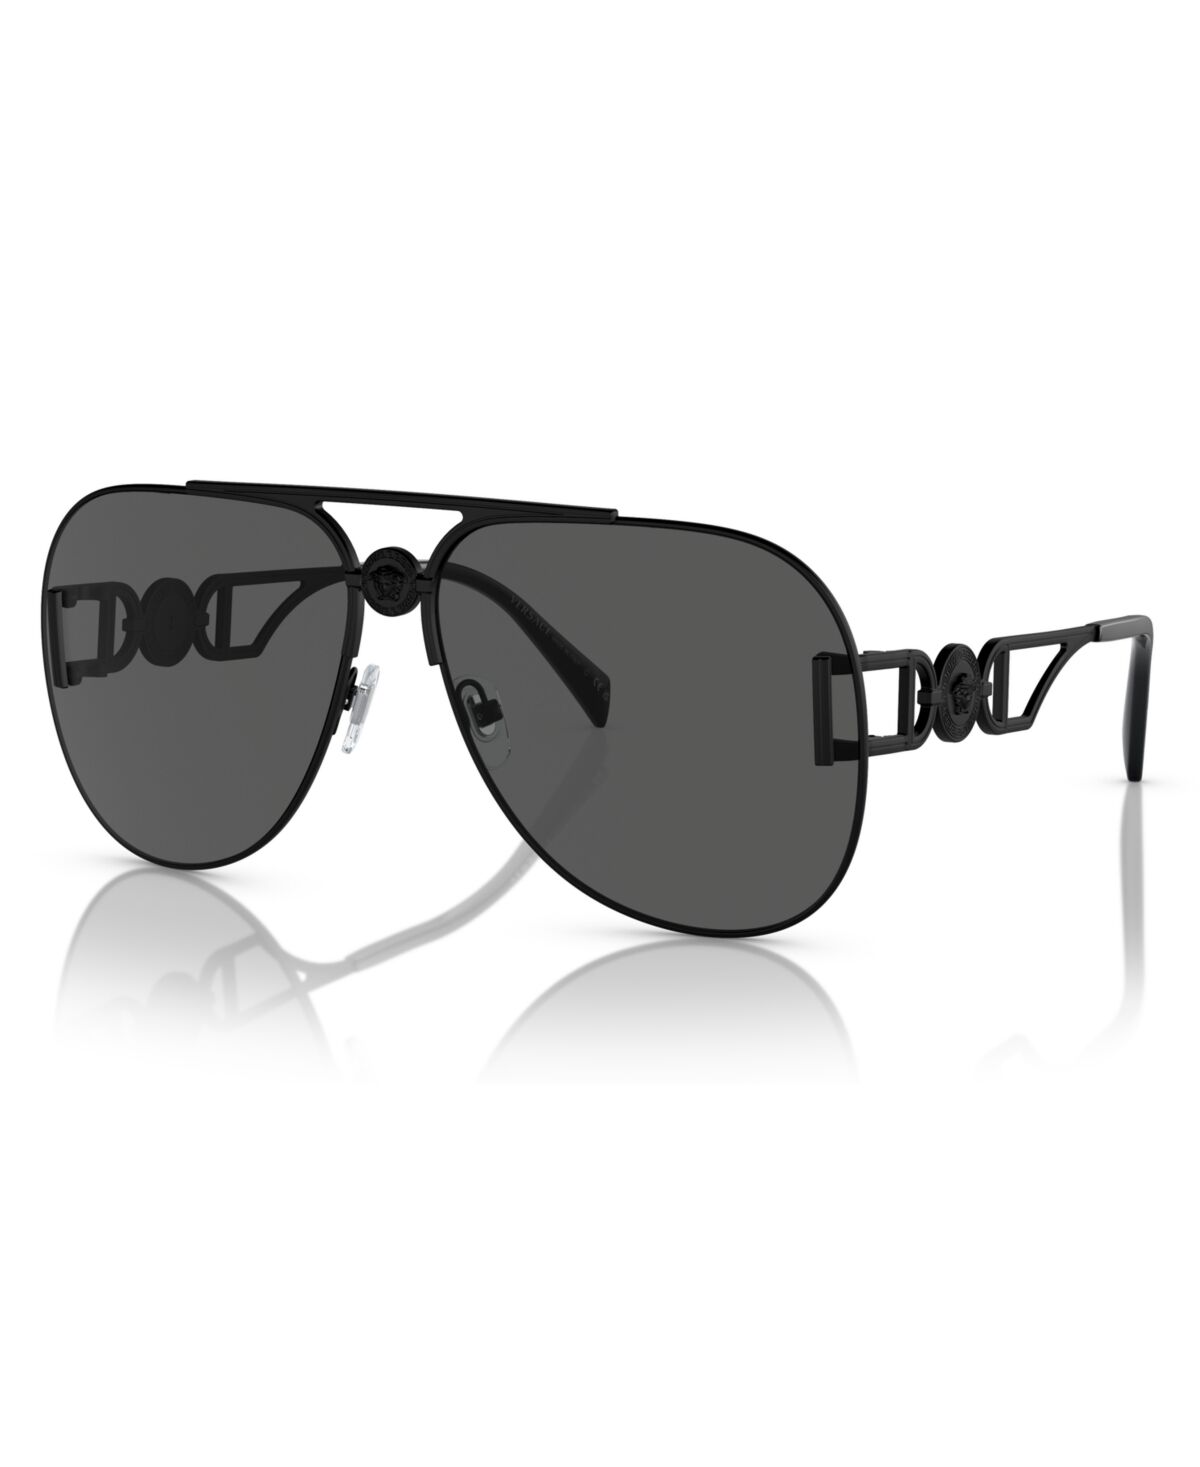 Versace Unisex Sunglasses, Mirror VE2255 - Matte Black